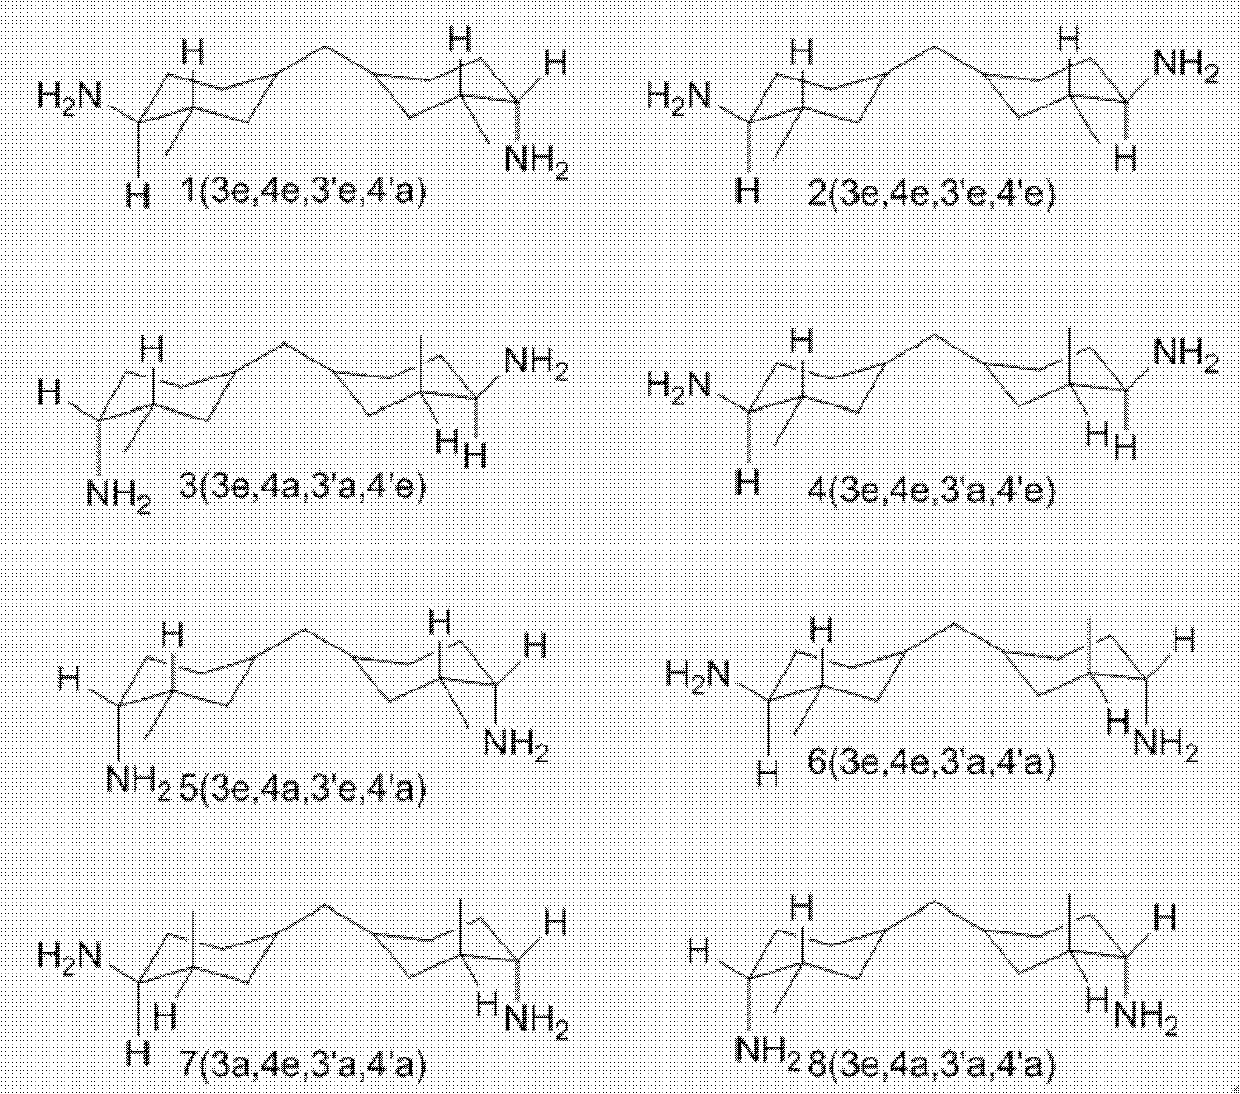 Method for synthesizing 3,3'-dimethyl-4,4'-diamino dicyclohexyl methane